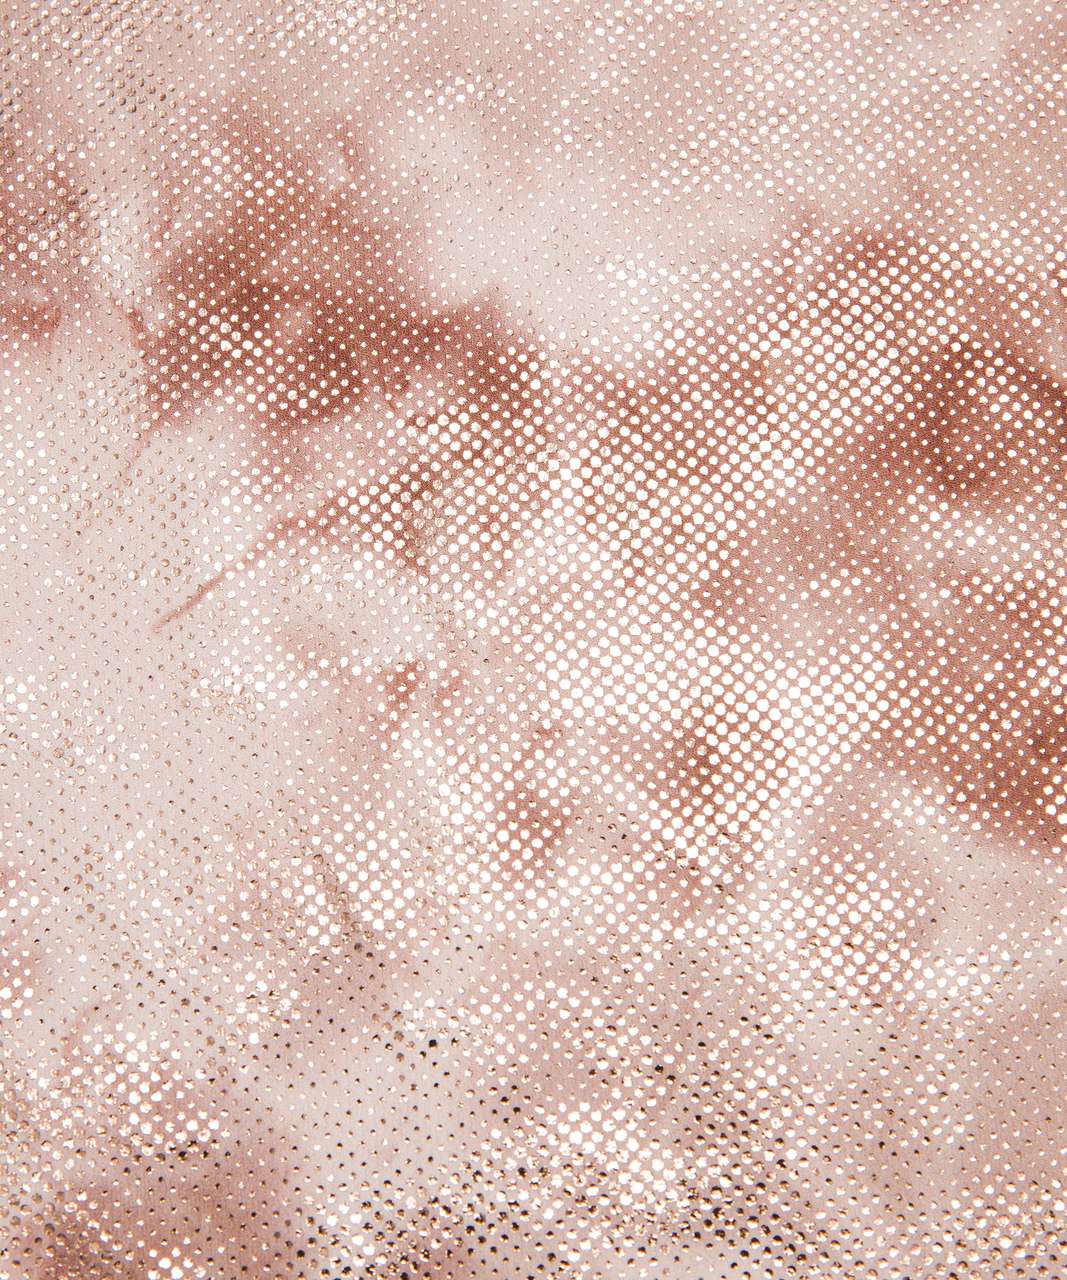 OOTD aligns 25” in diamond dye misty shell cocao diffuse dot foil